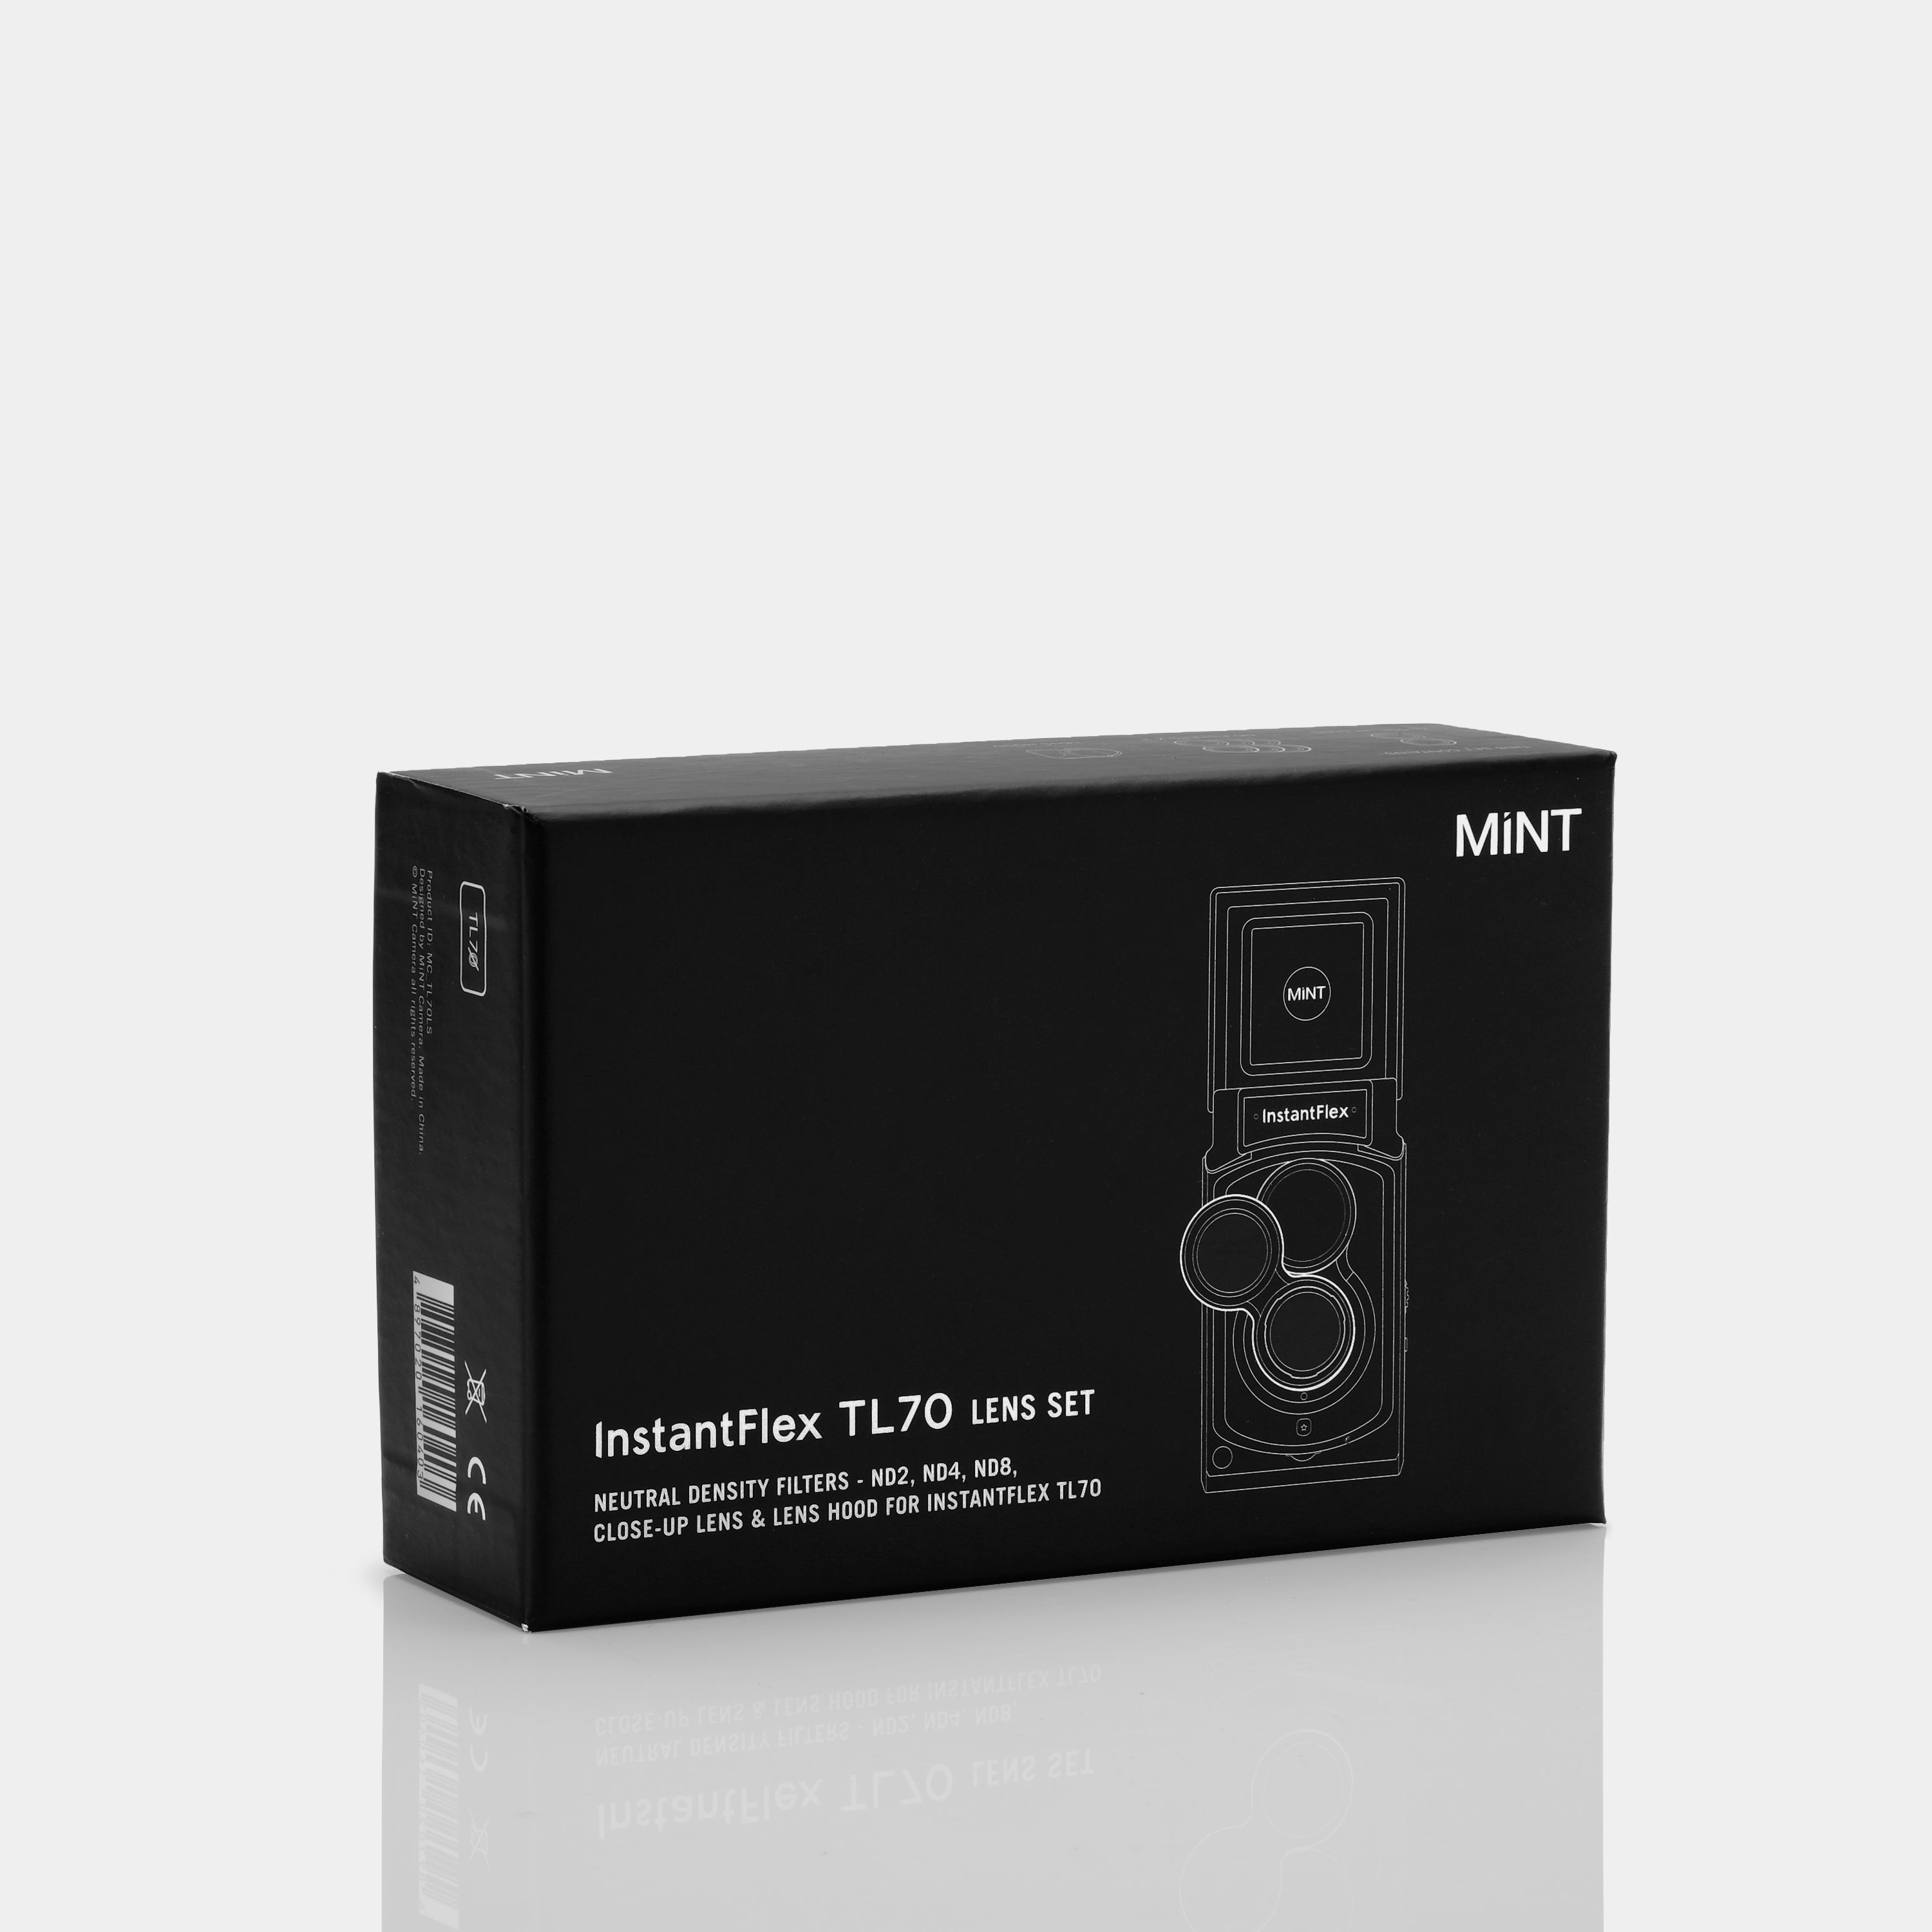 MiNT InstantFlex TL70 Lens Set